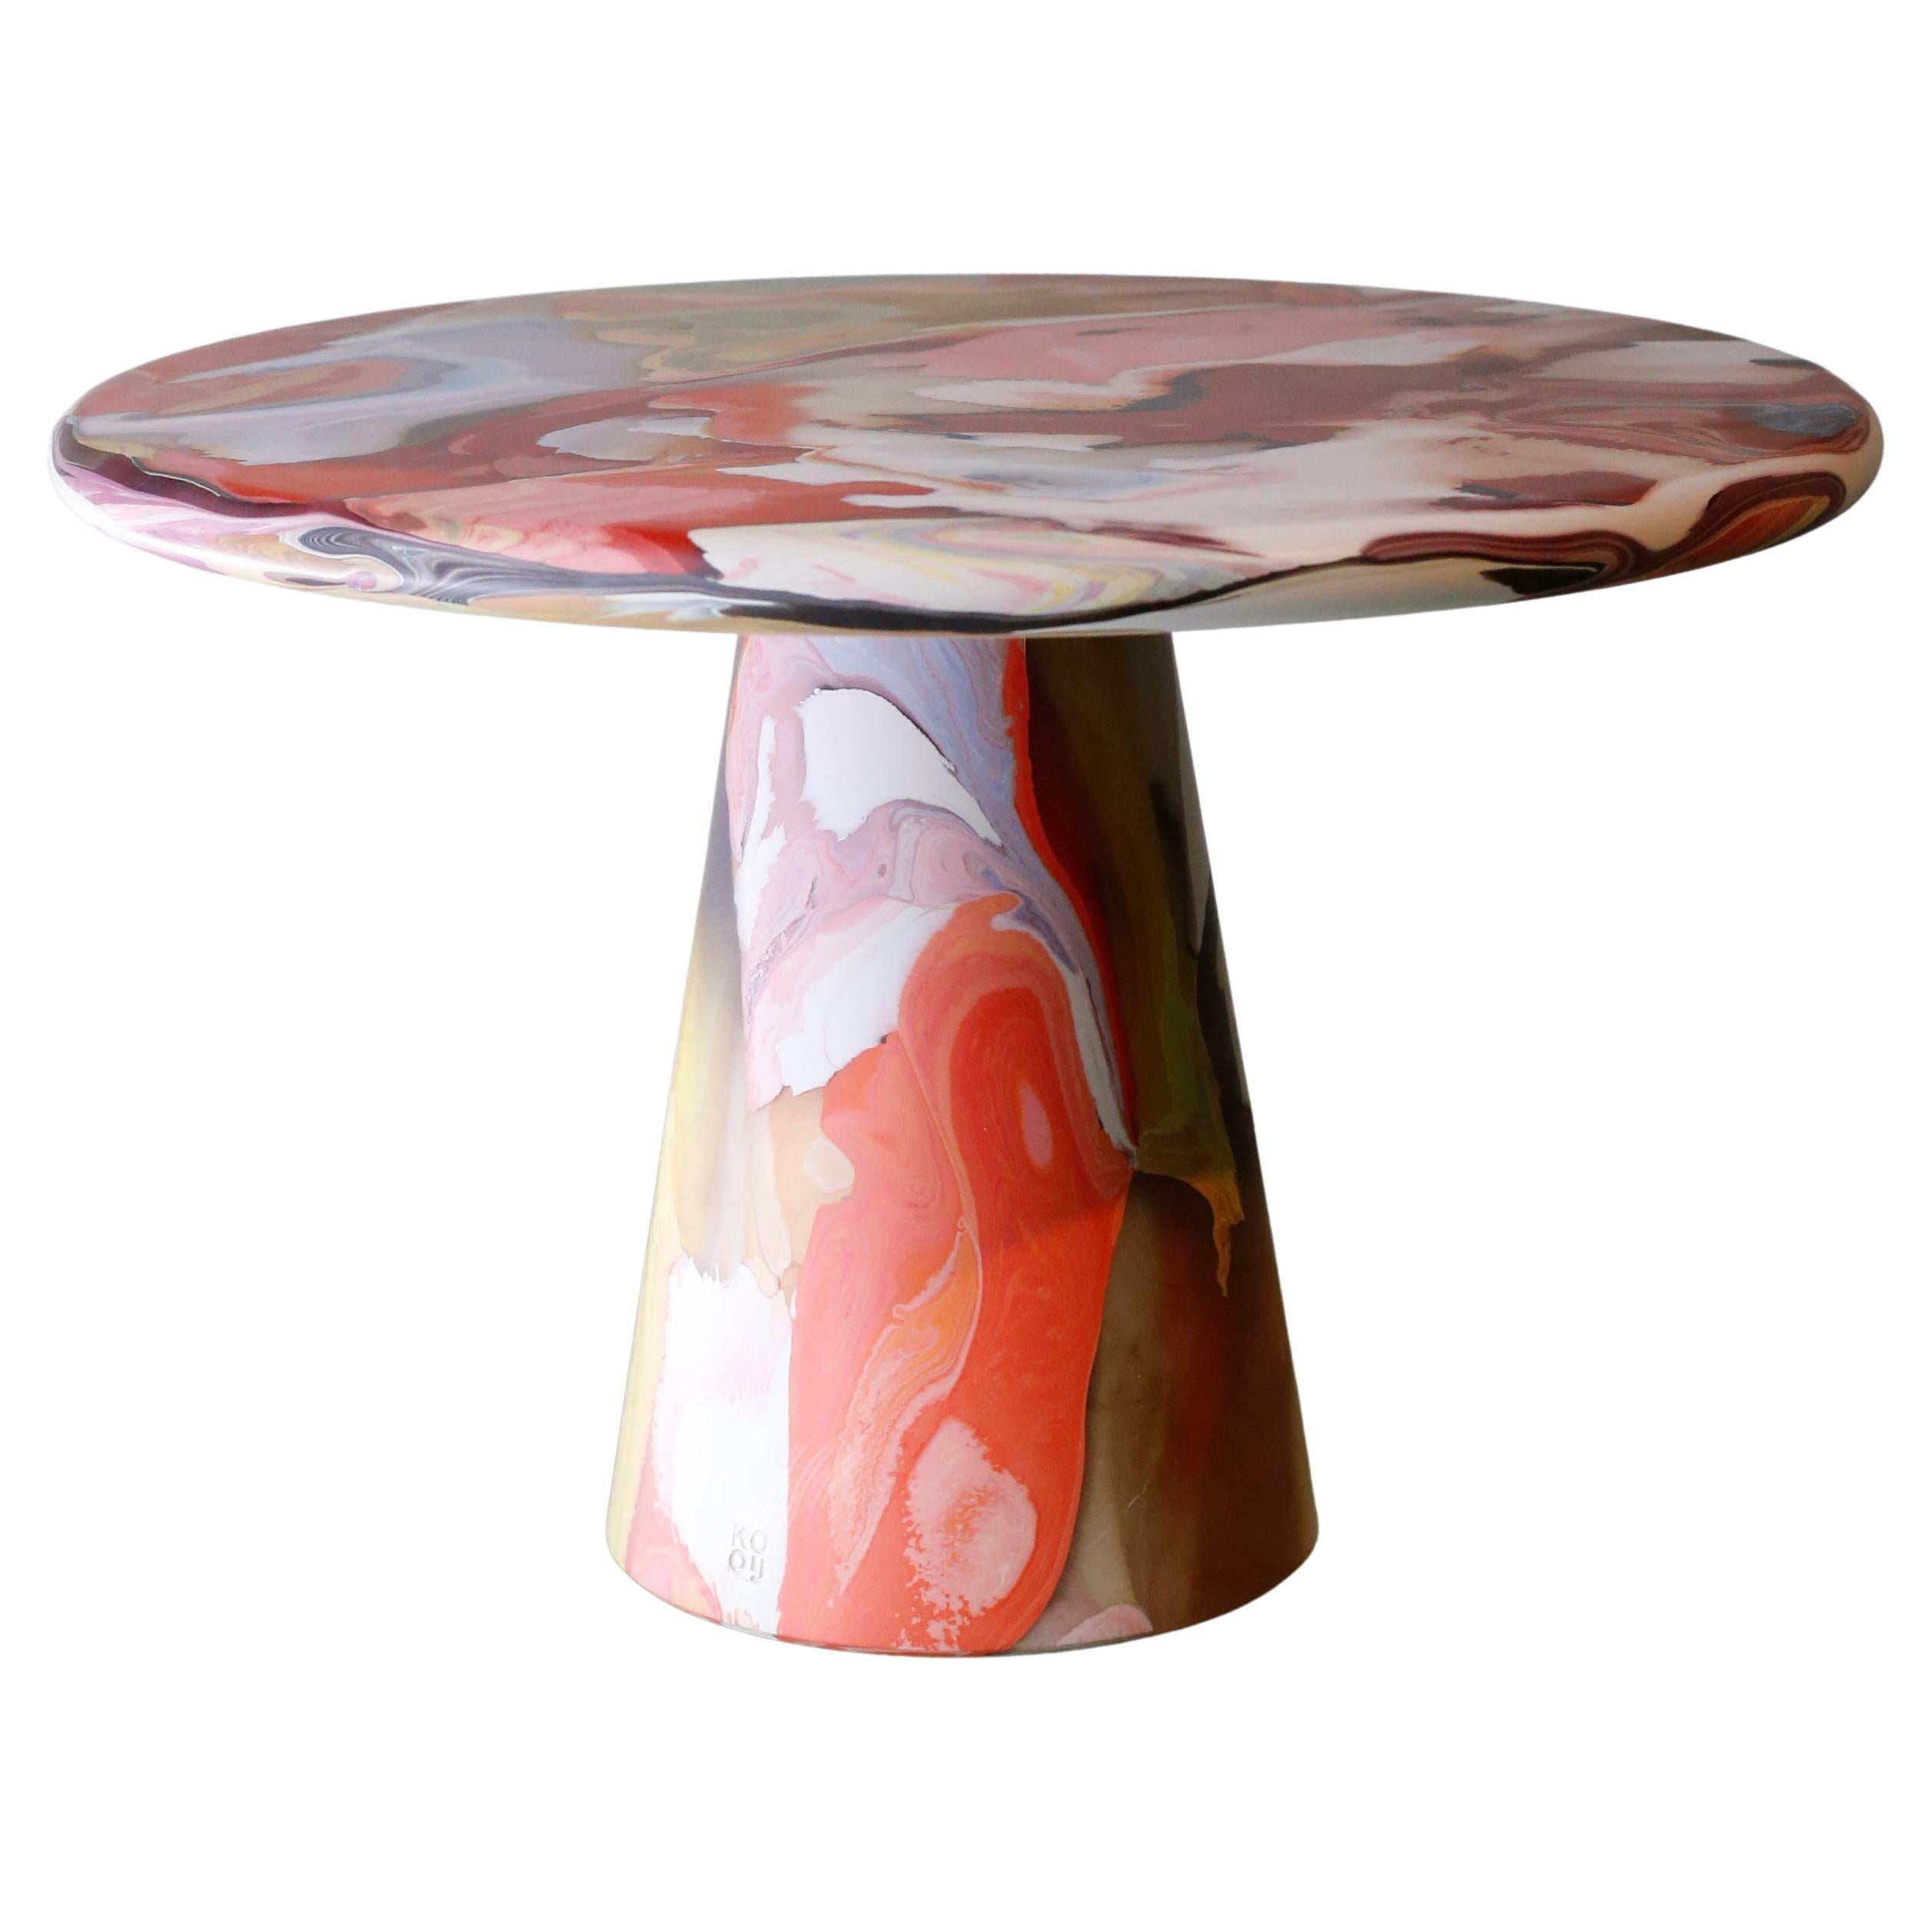 Contemporary Side Table Melting Pot Red, Dirk Vander Kooij